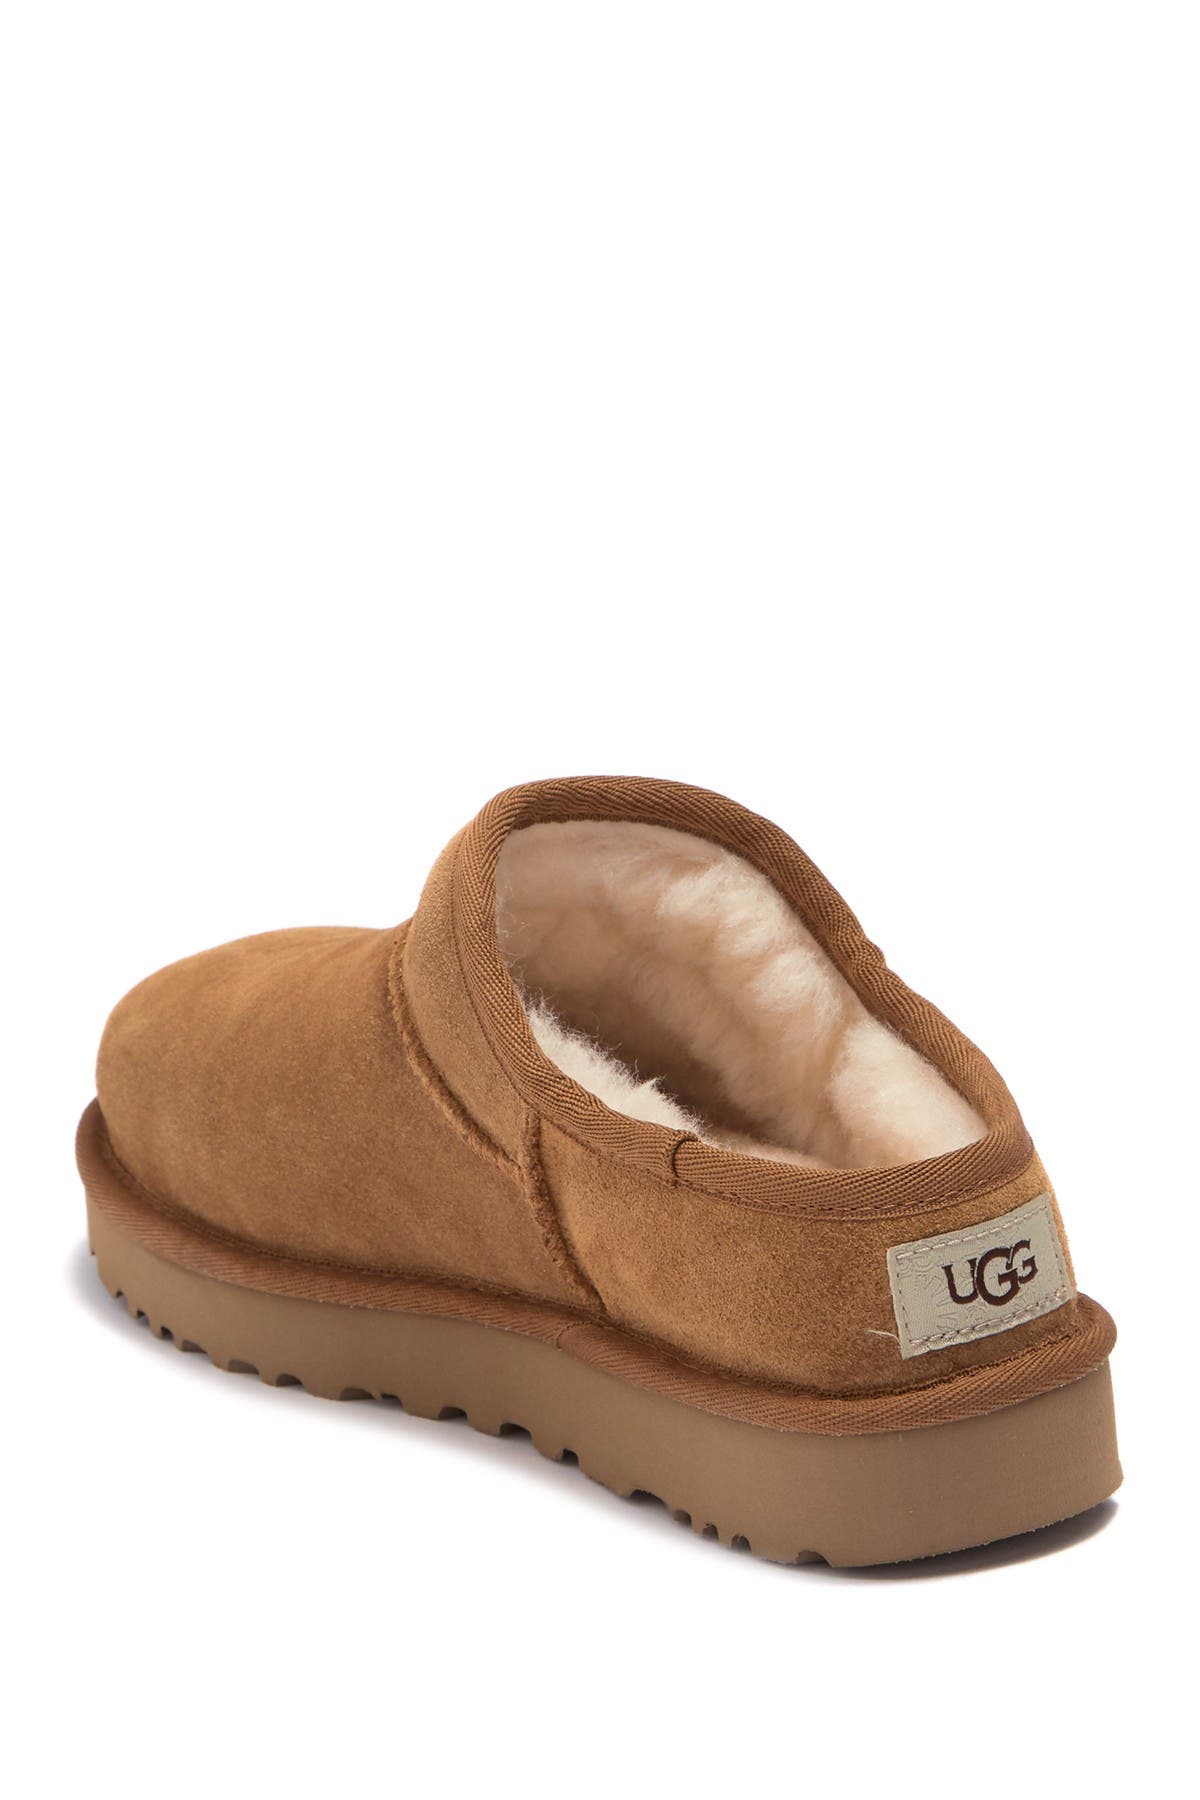 womens classic ugg slippers